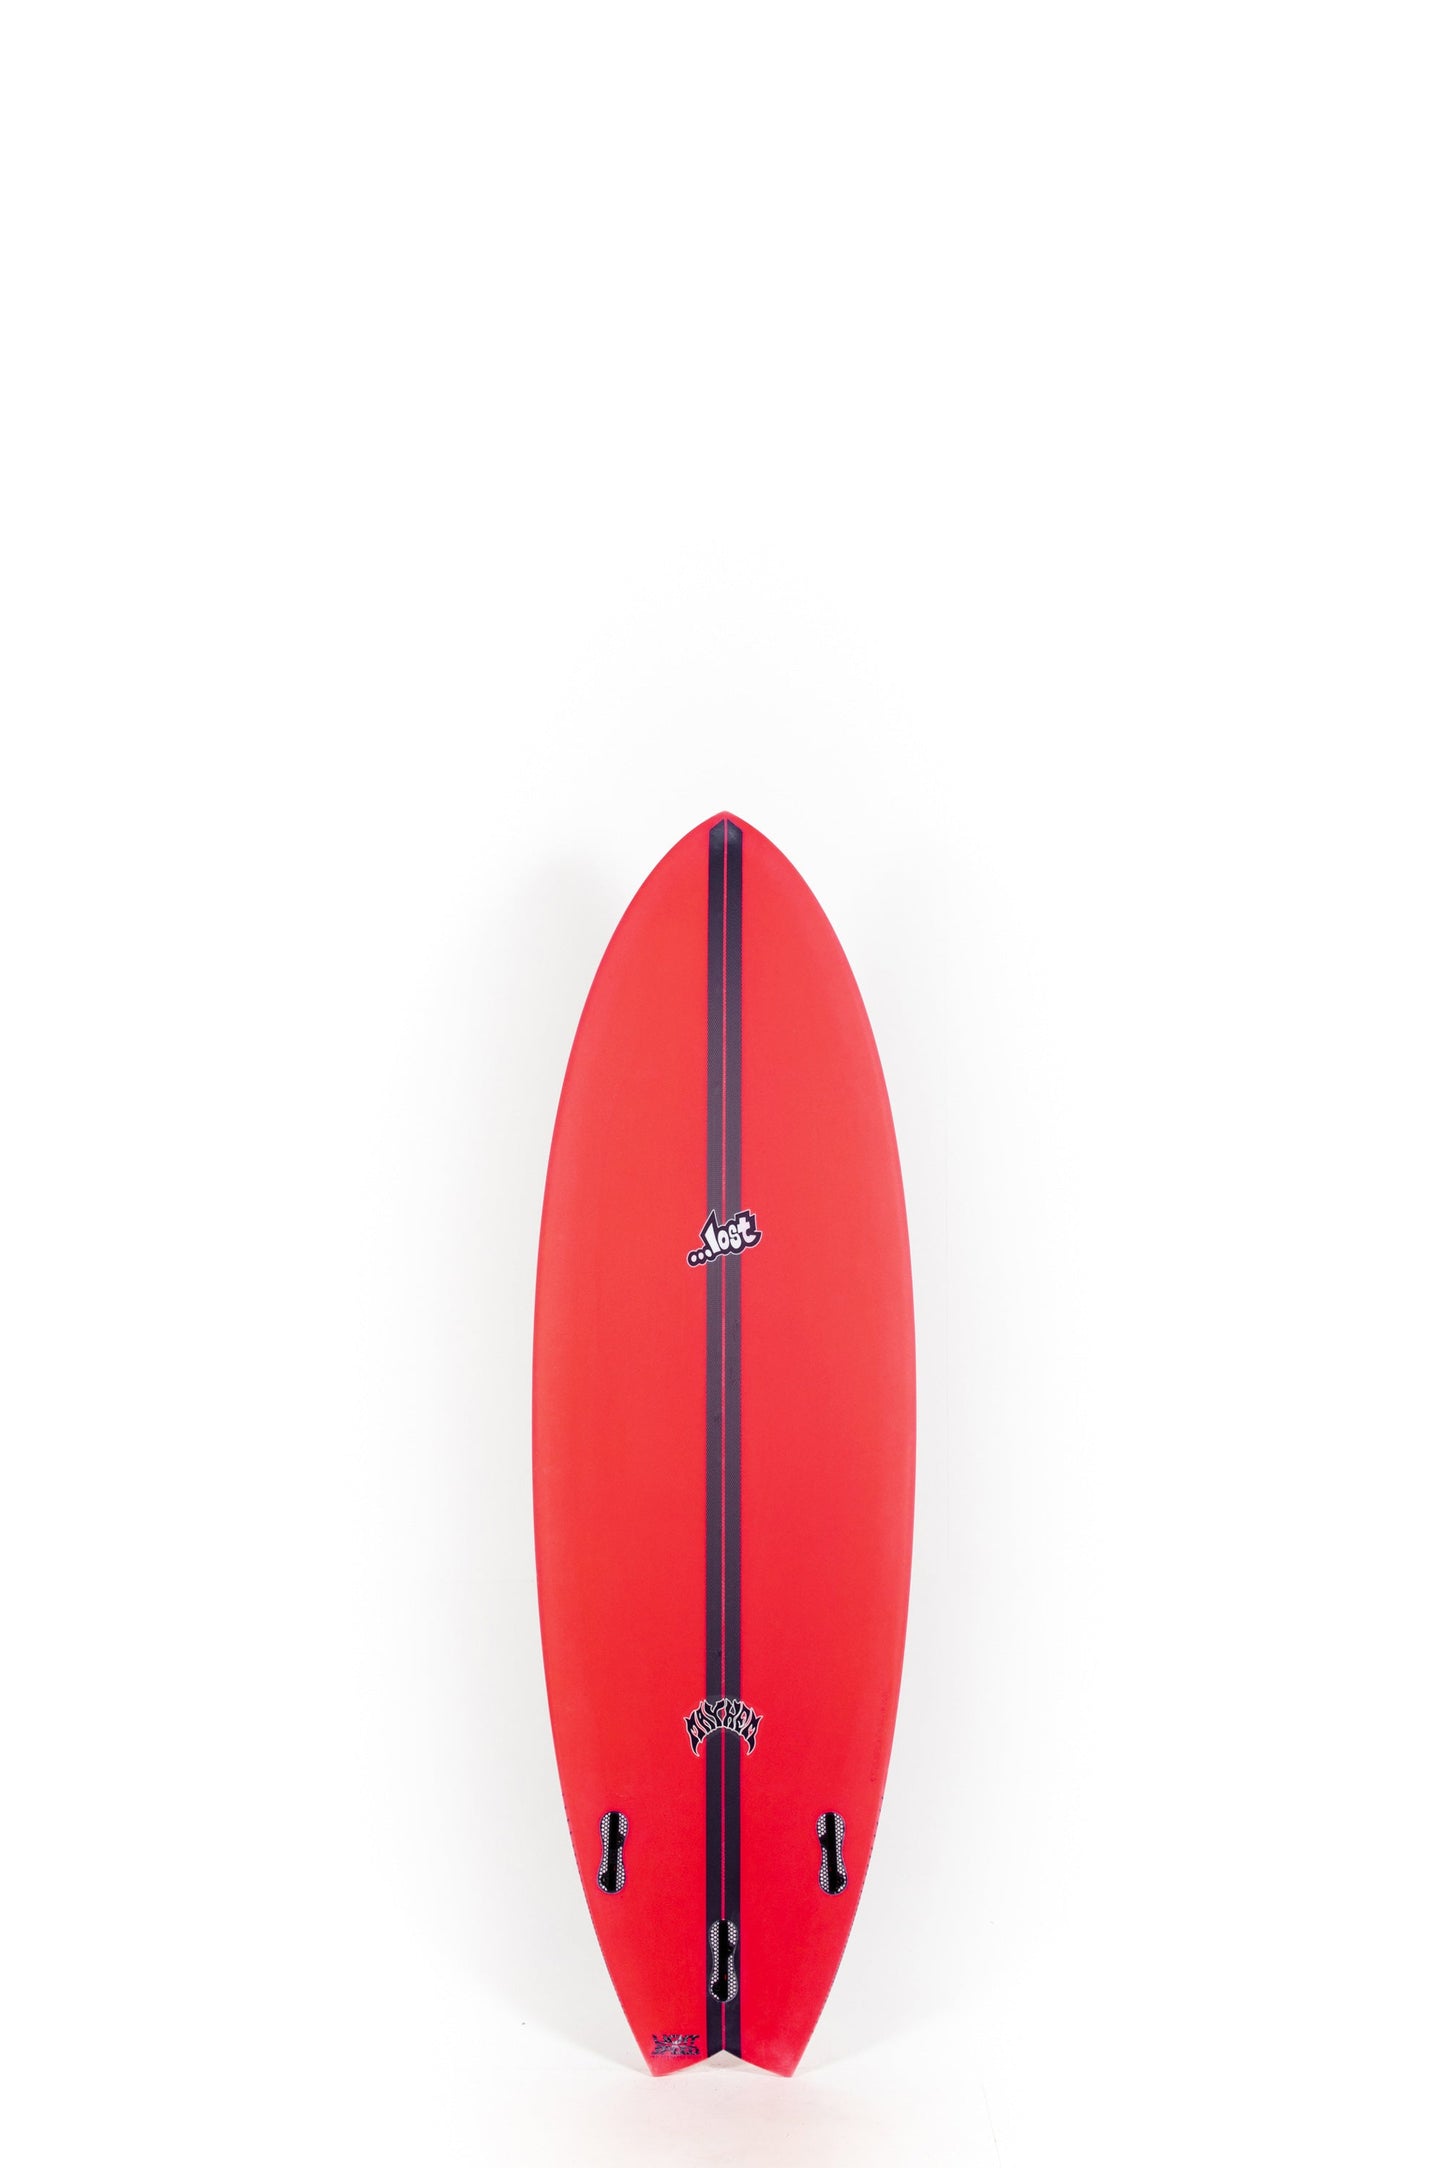 Pukas Surf Shop - Lost Surfboard - ROUND NOSE FISH - RNF '96 - Light Speed - 5'7"x 20" x 2.44 x 31L